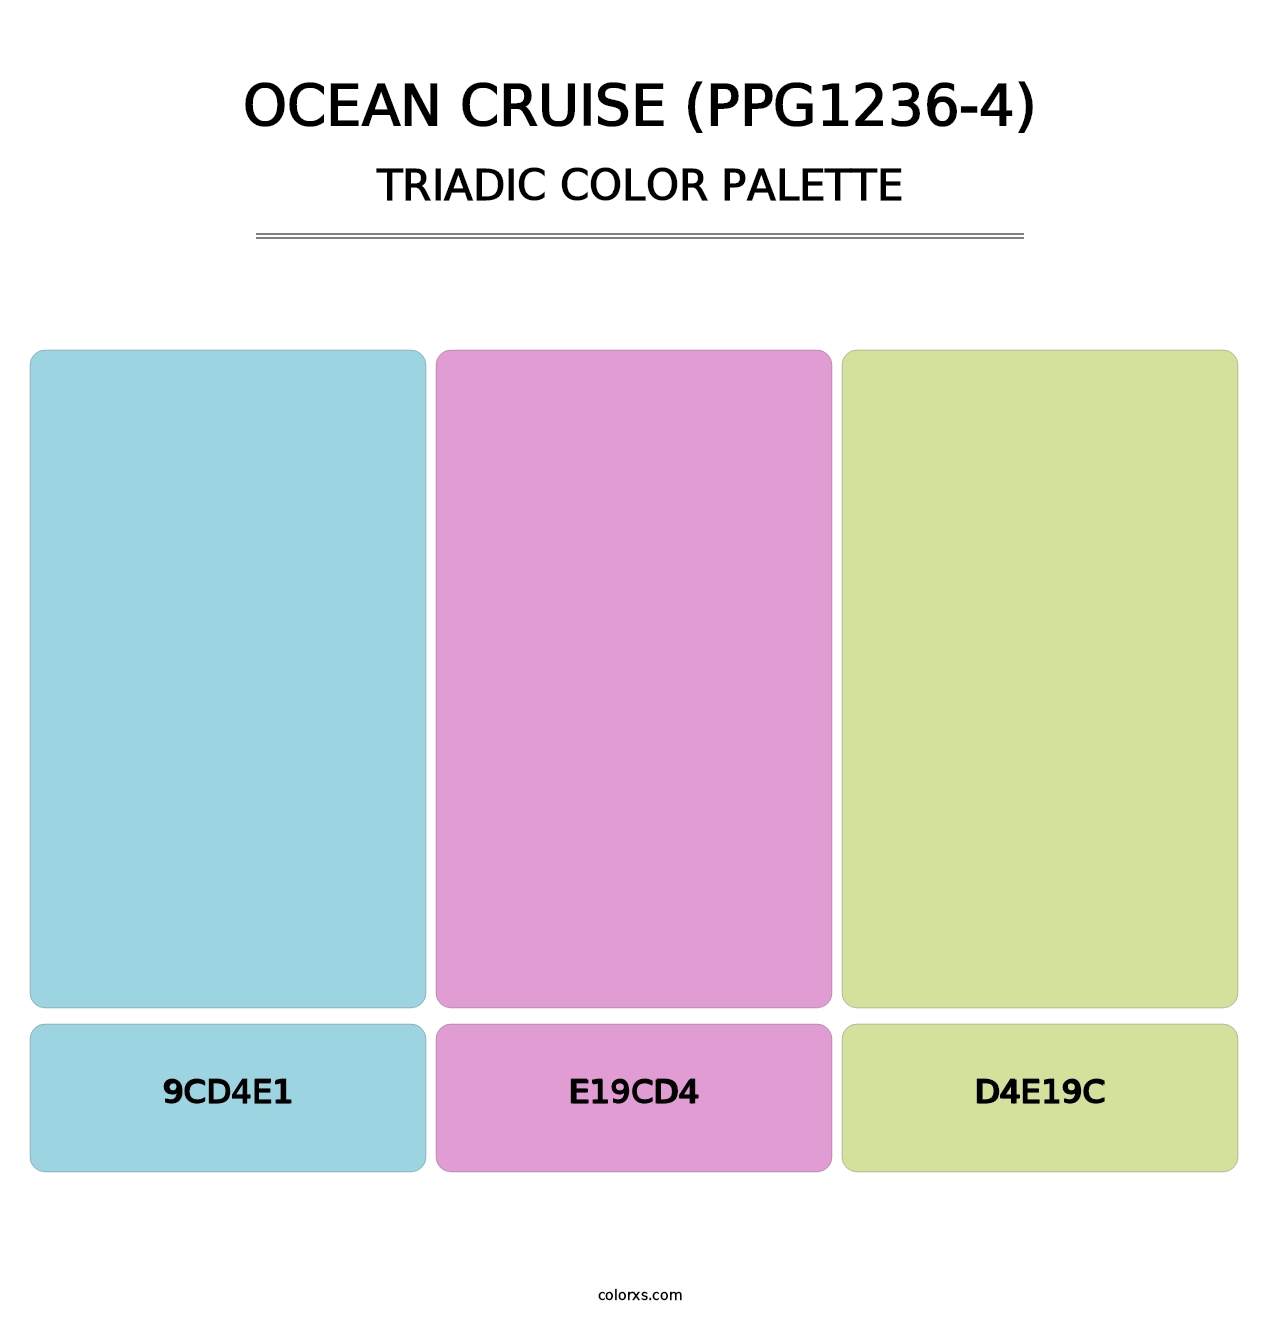 Ocean Cruise (PPG1236-4) - Triadic Color Palette